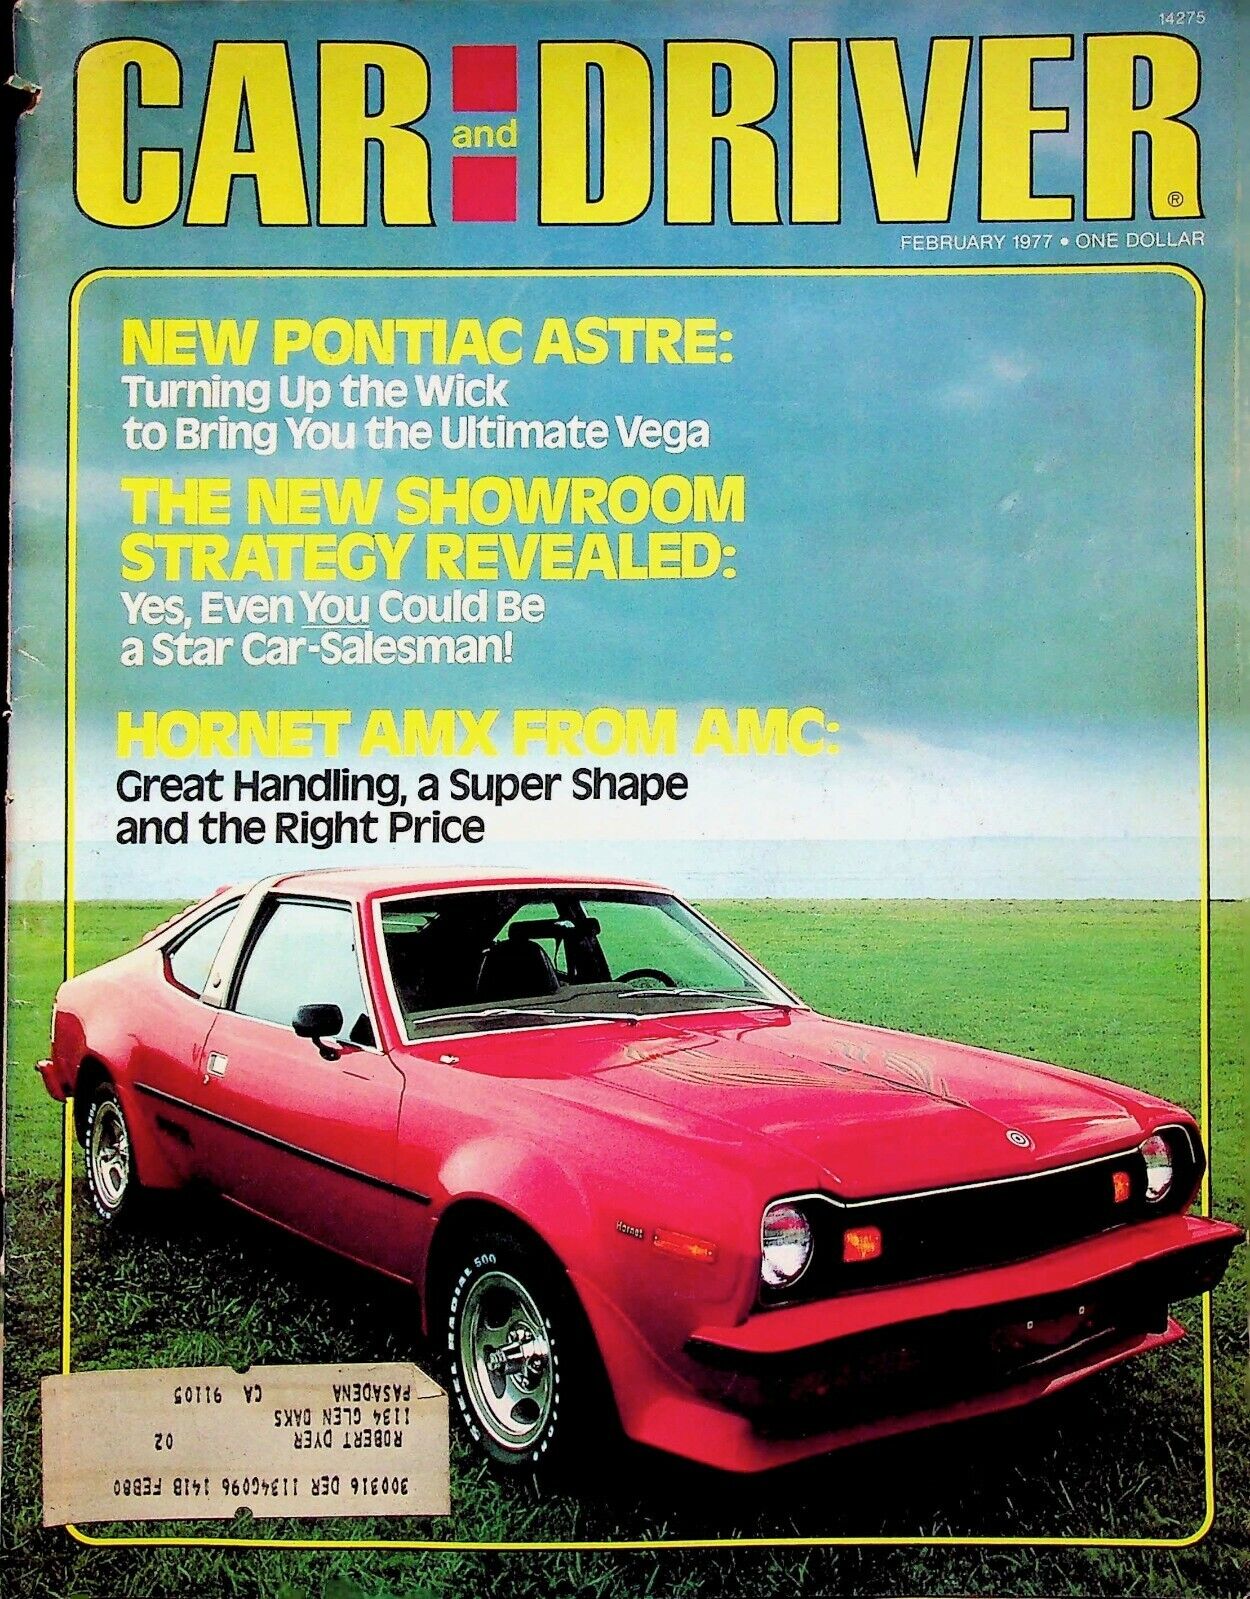 NEW PONTIAC ASTRE - CAR AND DRIVER MAGAZINE, FEBRUARY 1977 VOLUME 22 NUMBER 8